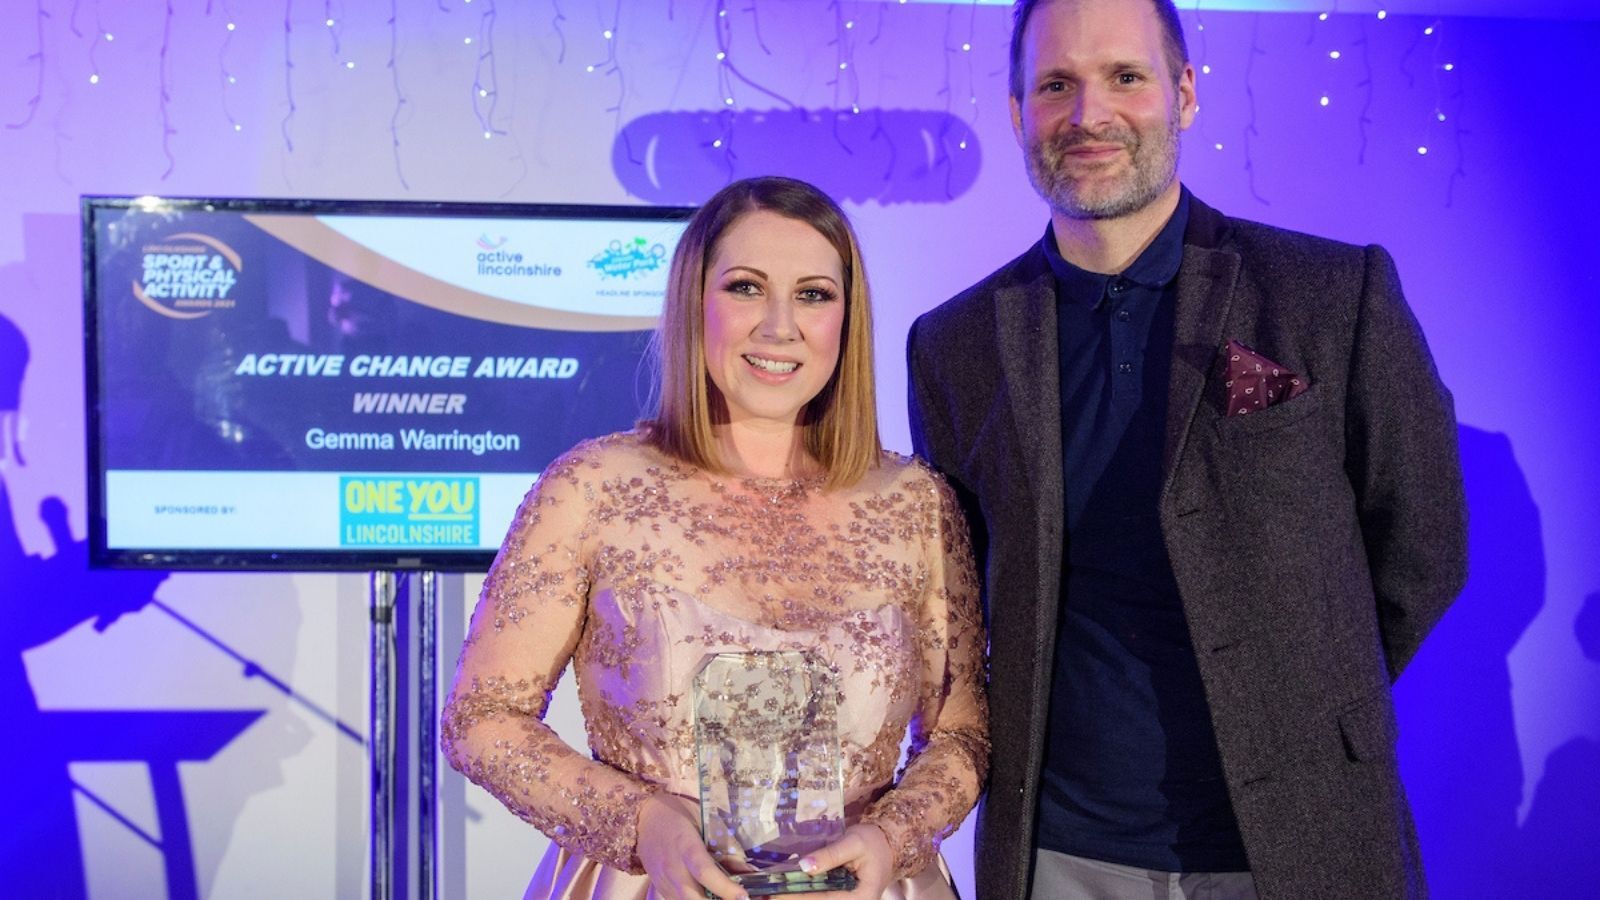 Active Change Award Winner 2021 - Gemma Warrington